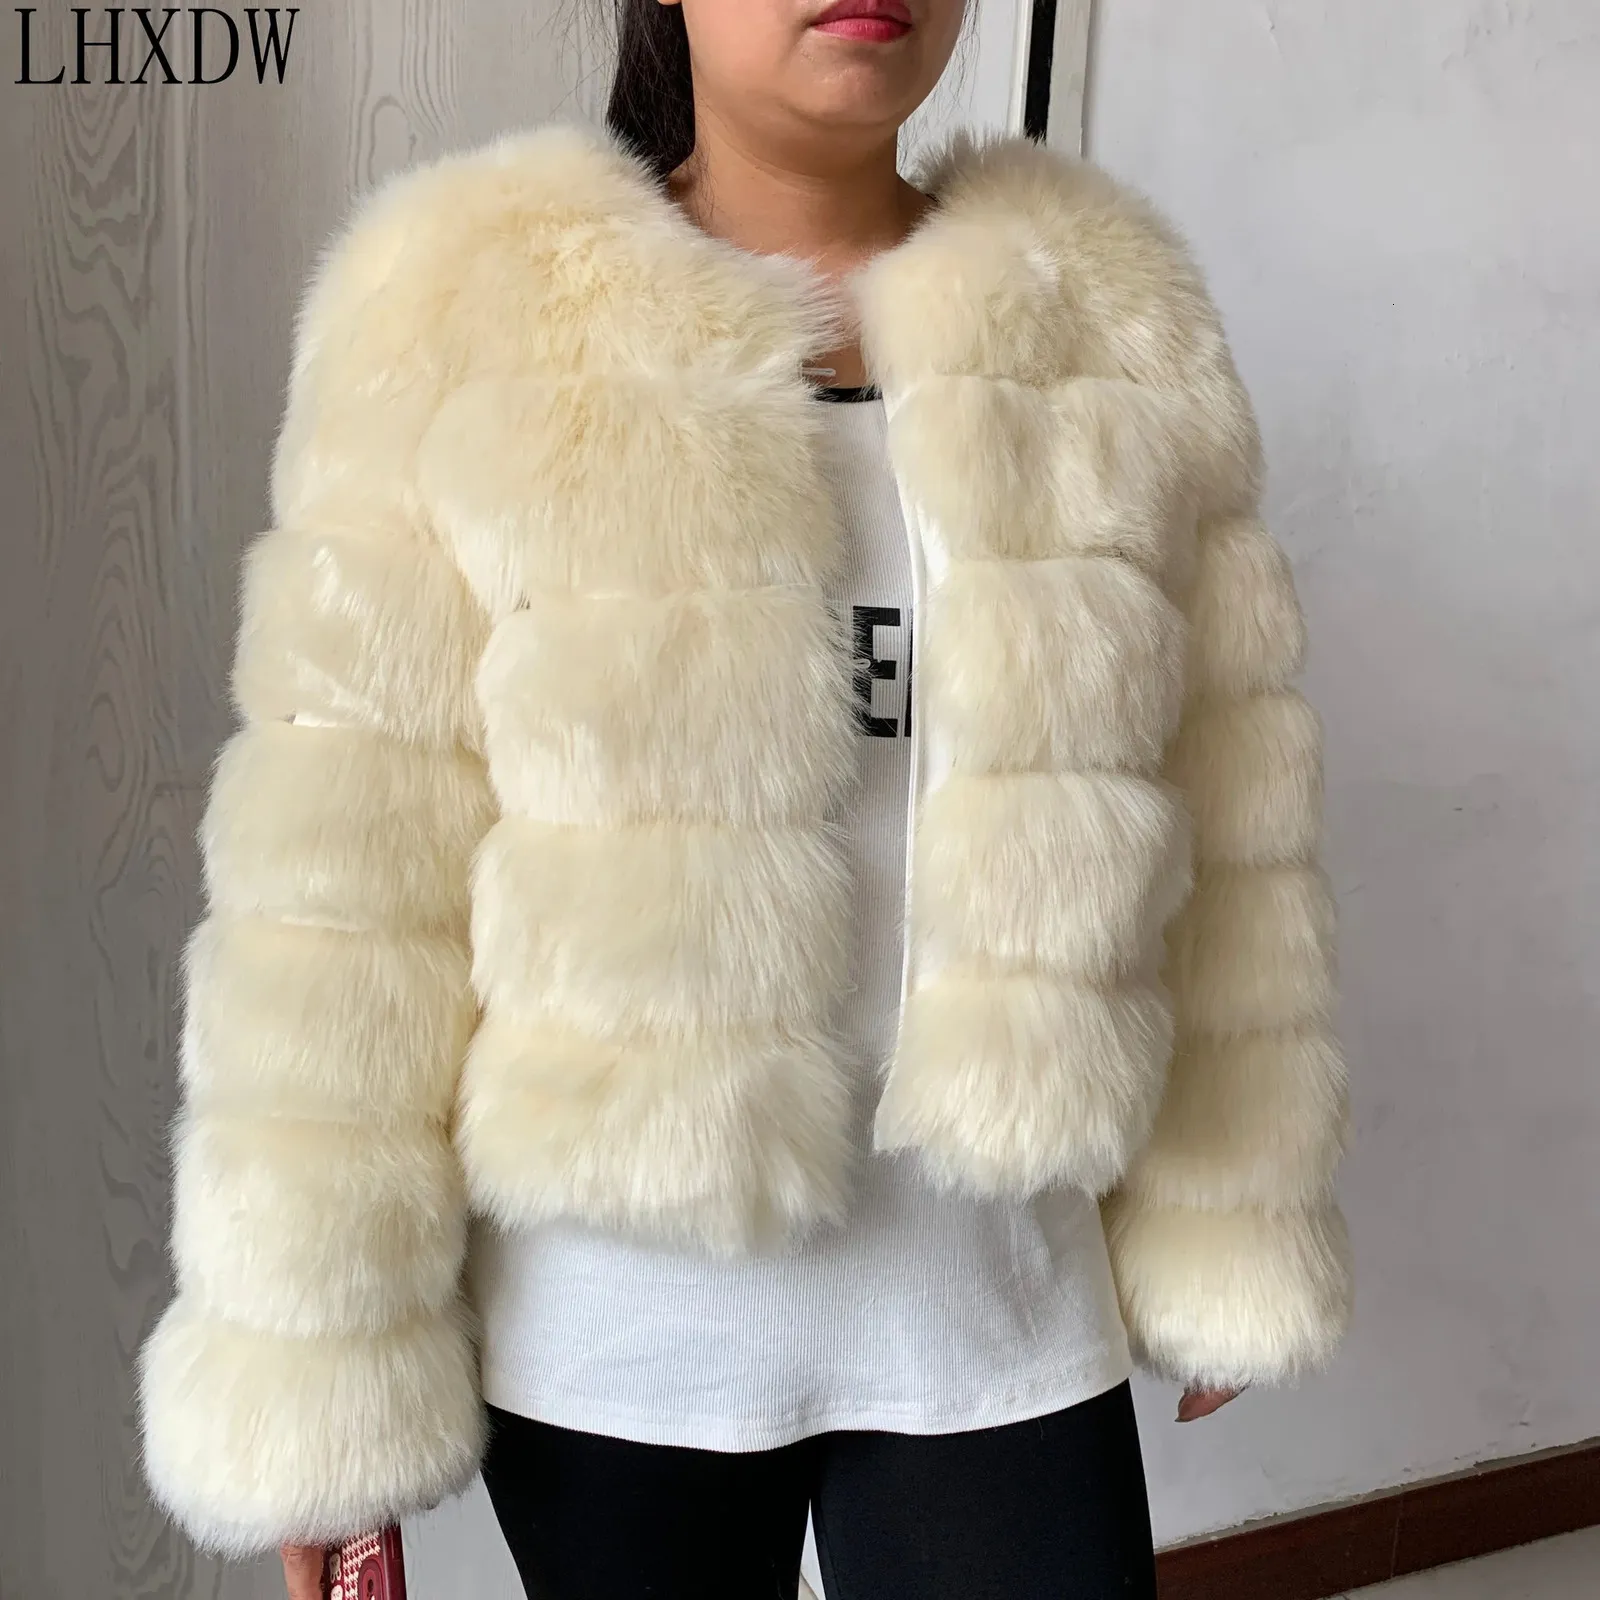 LHXDW Women's Winter Artificial Fur Coat Fashion Fluff Faux Short Sleeve and Long Jacket False 231220